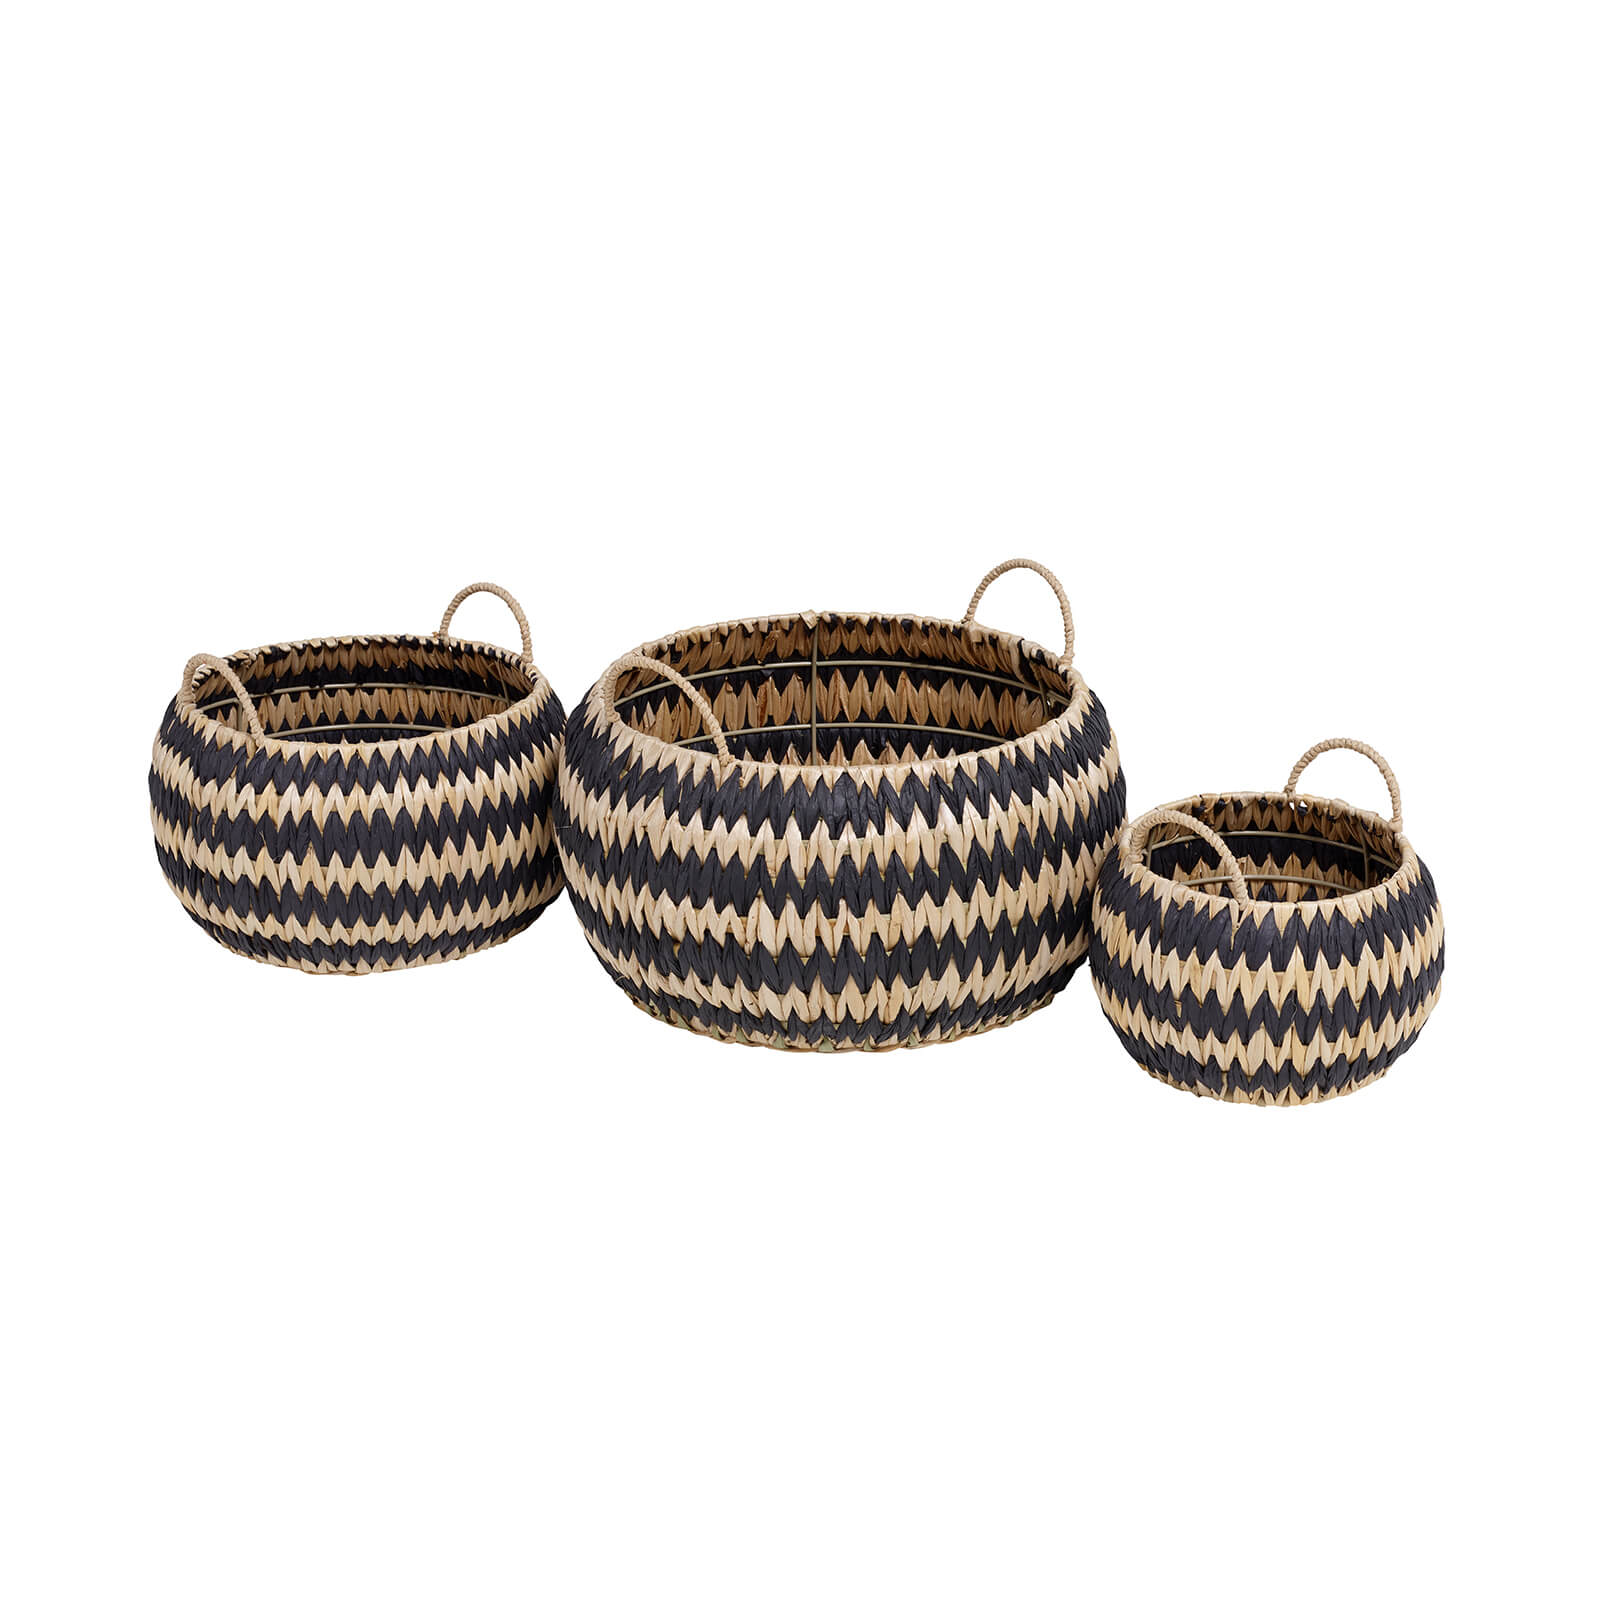 Photo of Black Round Flatweave Baskets - Set Of 3